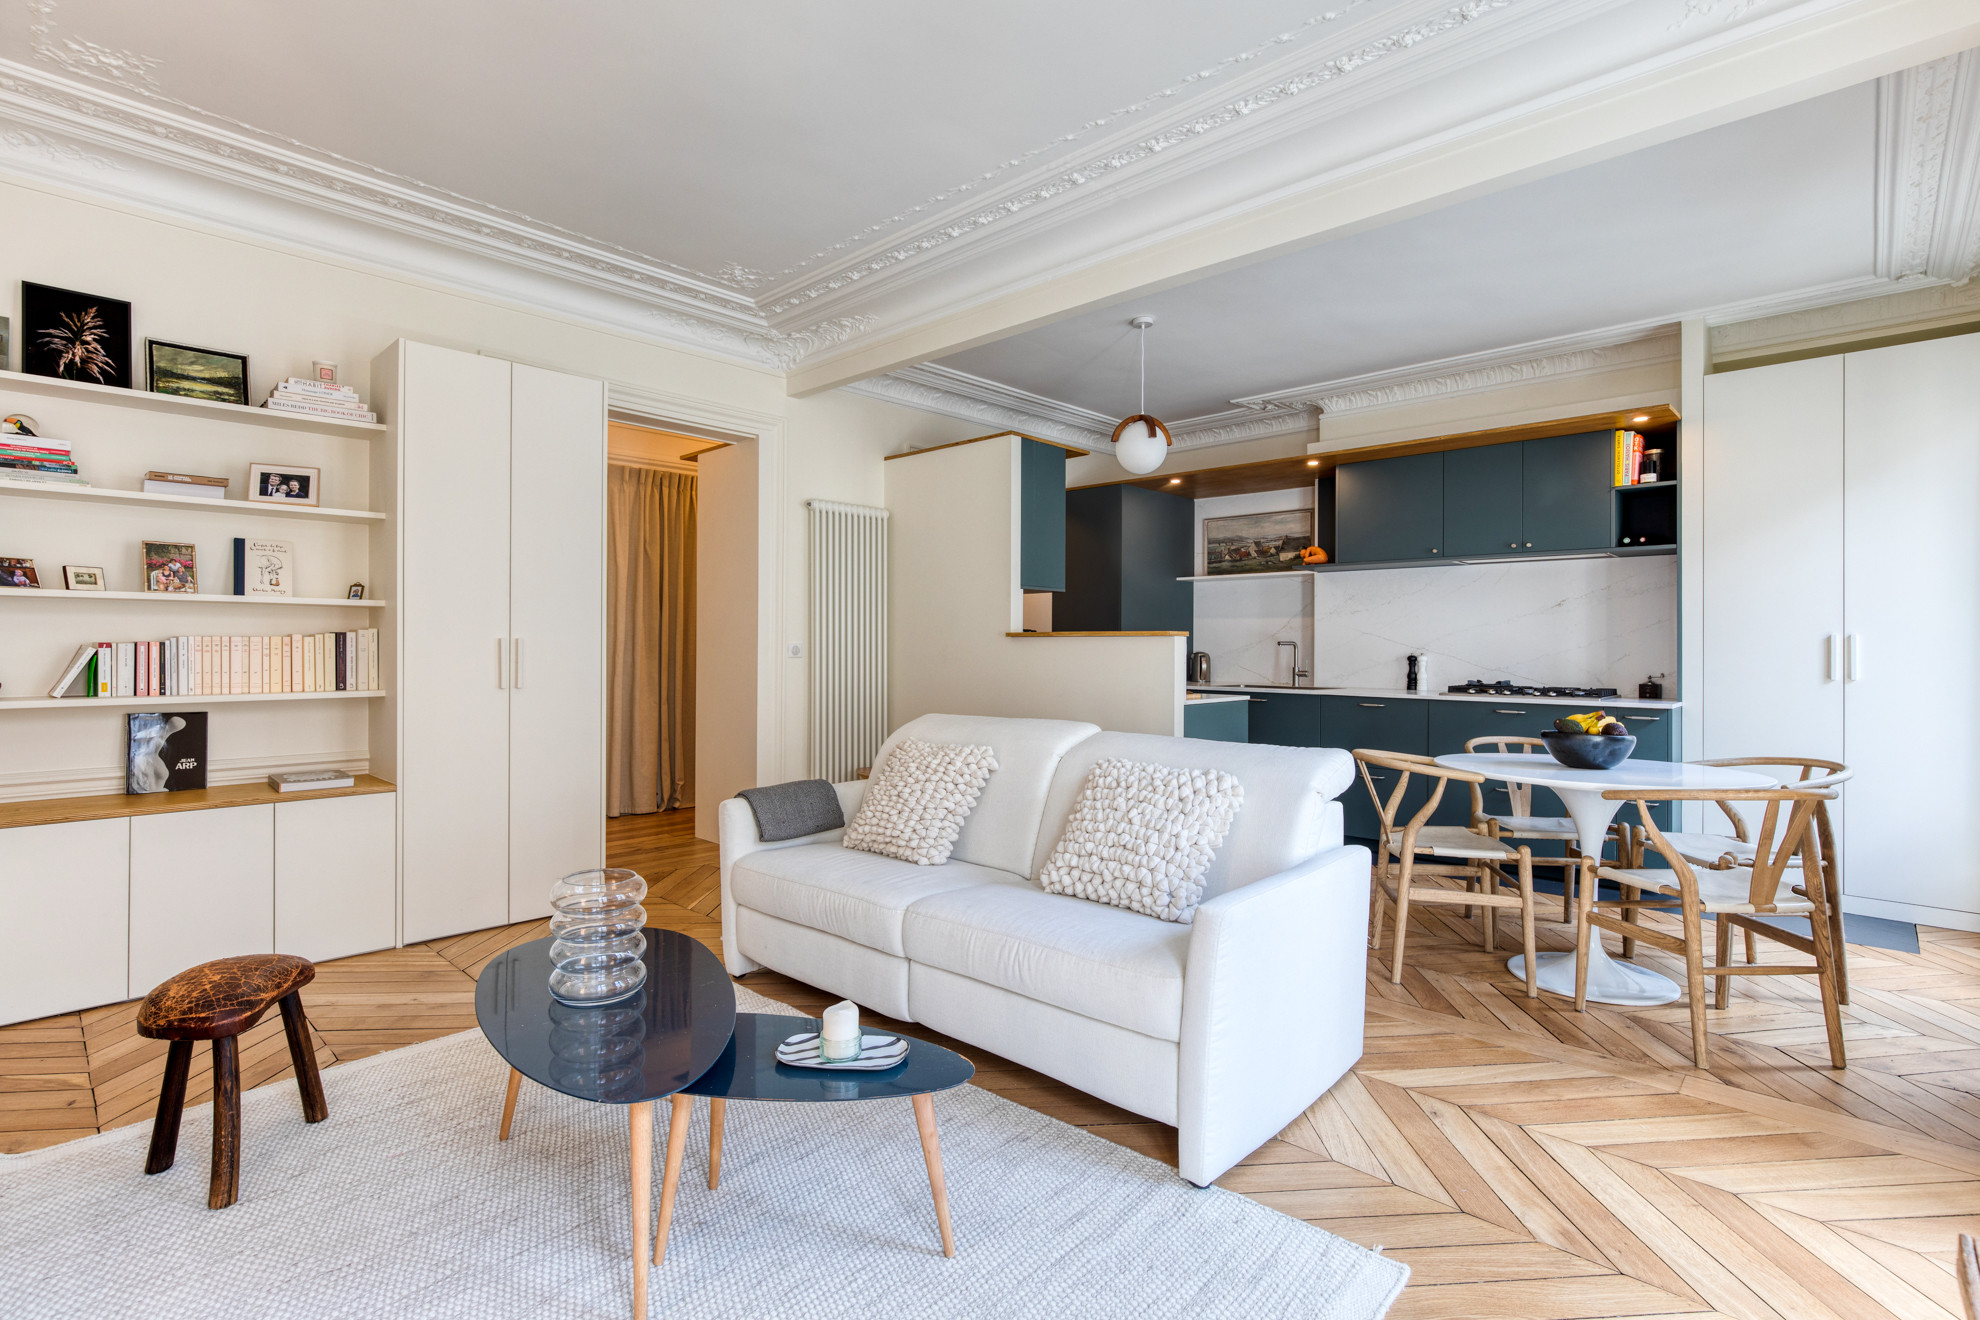 Home design - contemporary home design idea in Paris